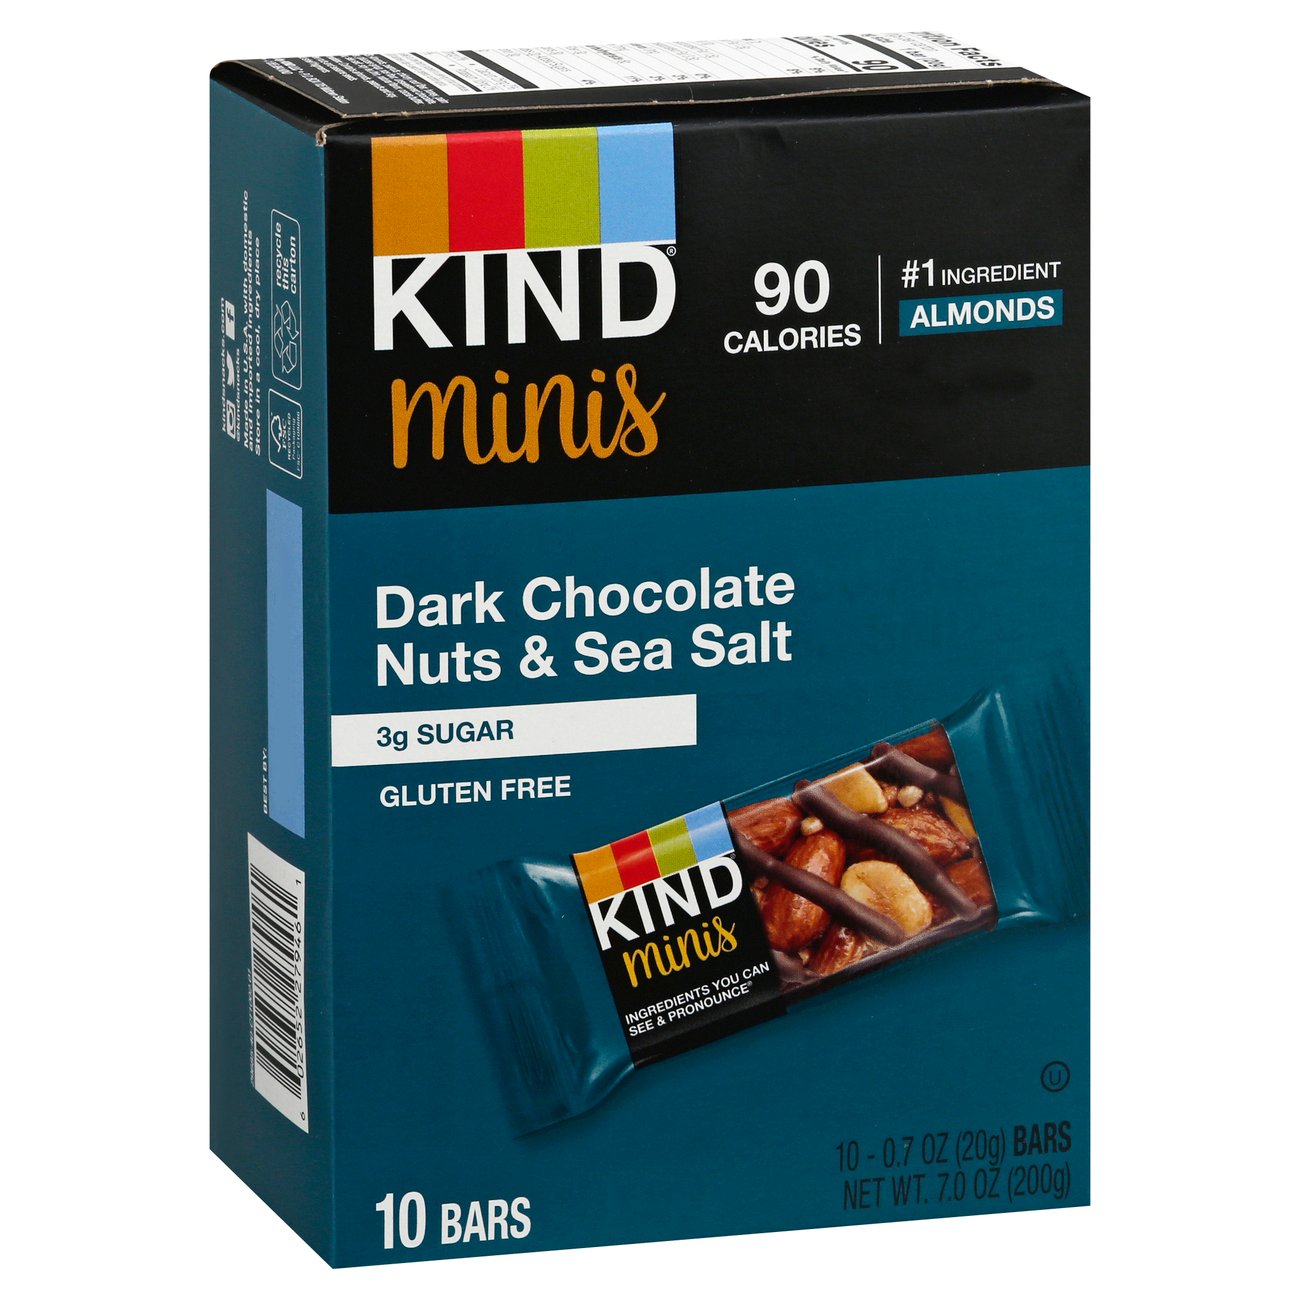 Kind Minis Dark Chocolate Nuts & Sea Salt Bars - Shop Granola & Snack